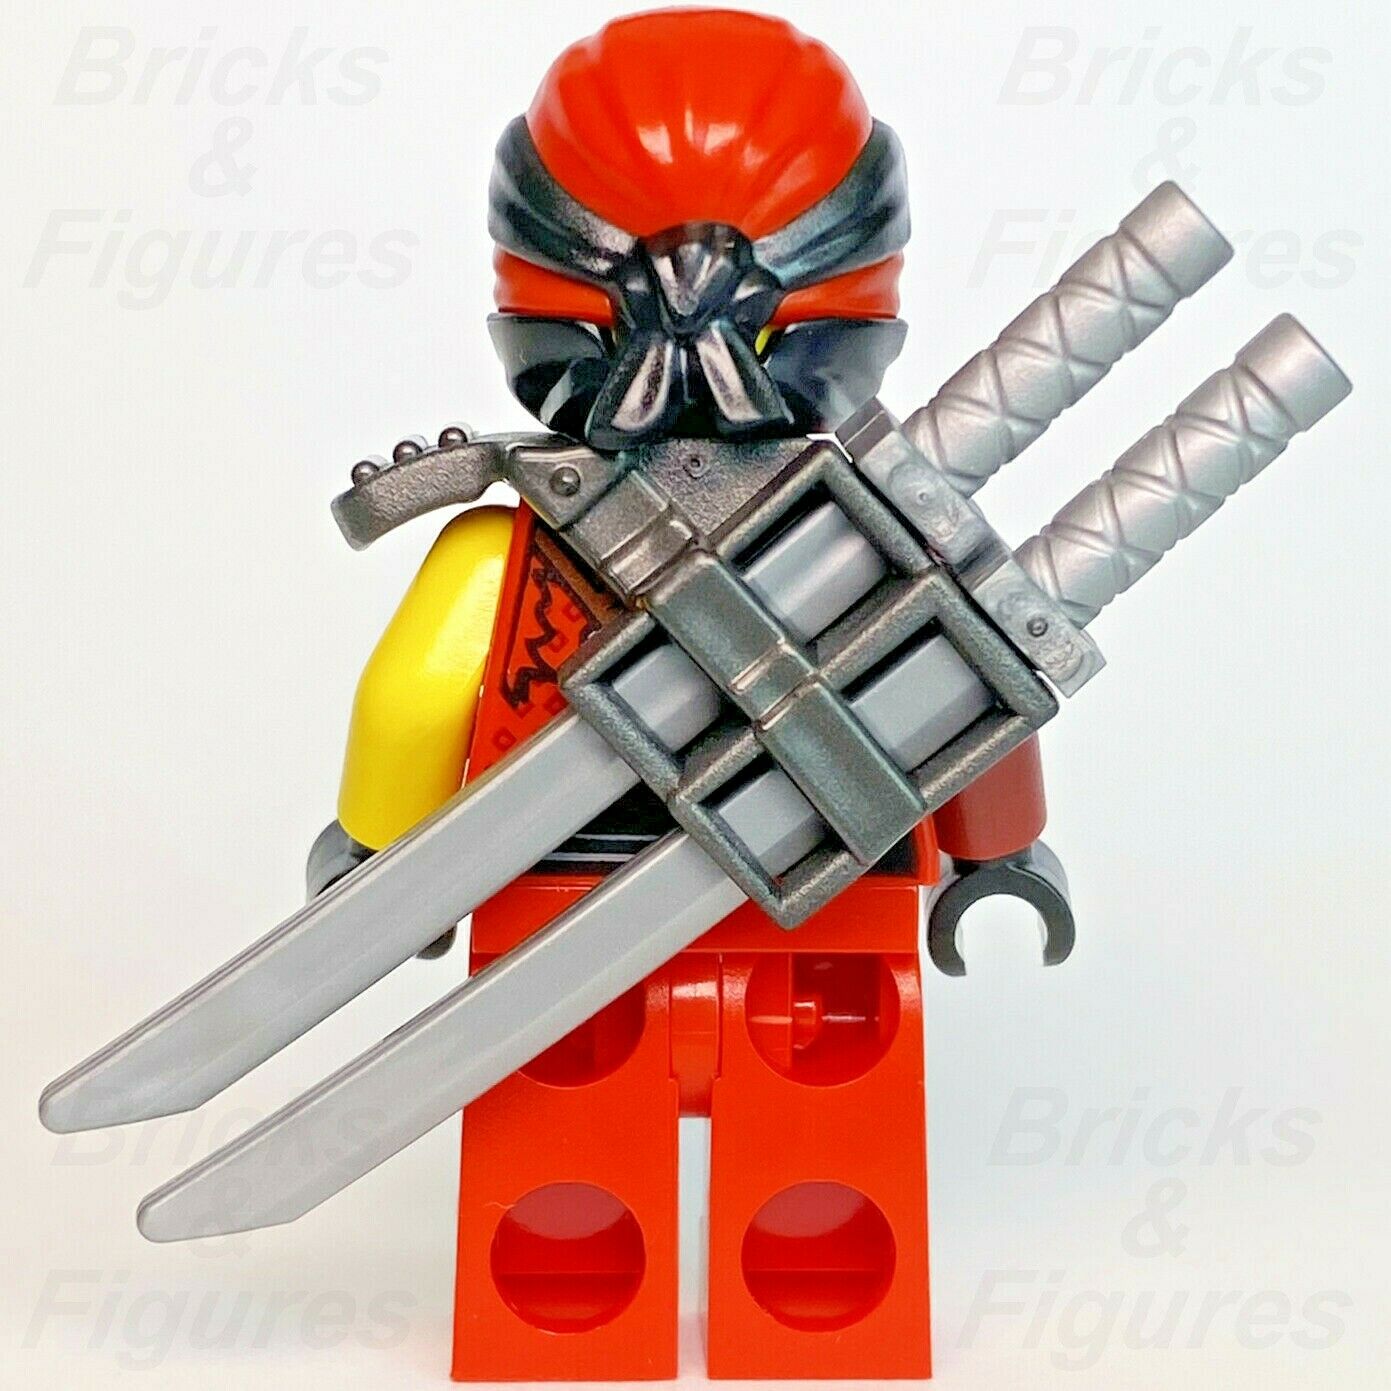 New Ninjago LEGO Kai Hunted Red Fire Ninja Minifigure from set 70653 njo473 - Bricks & Figures